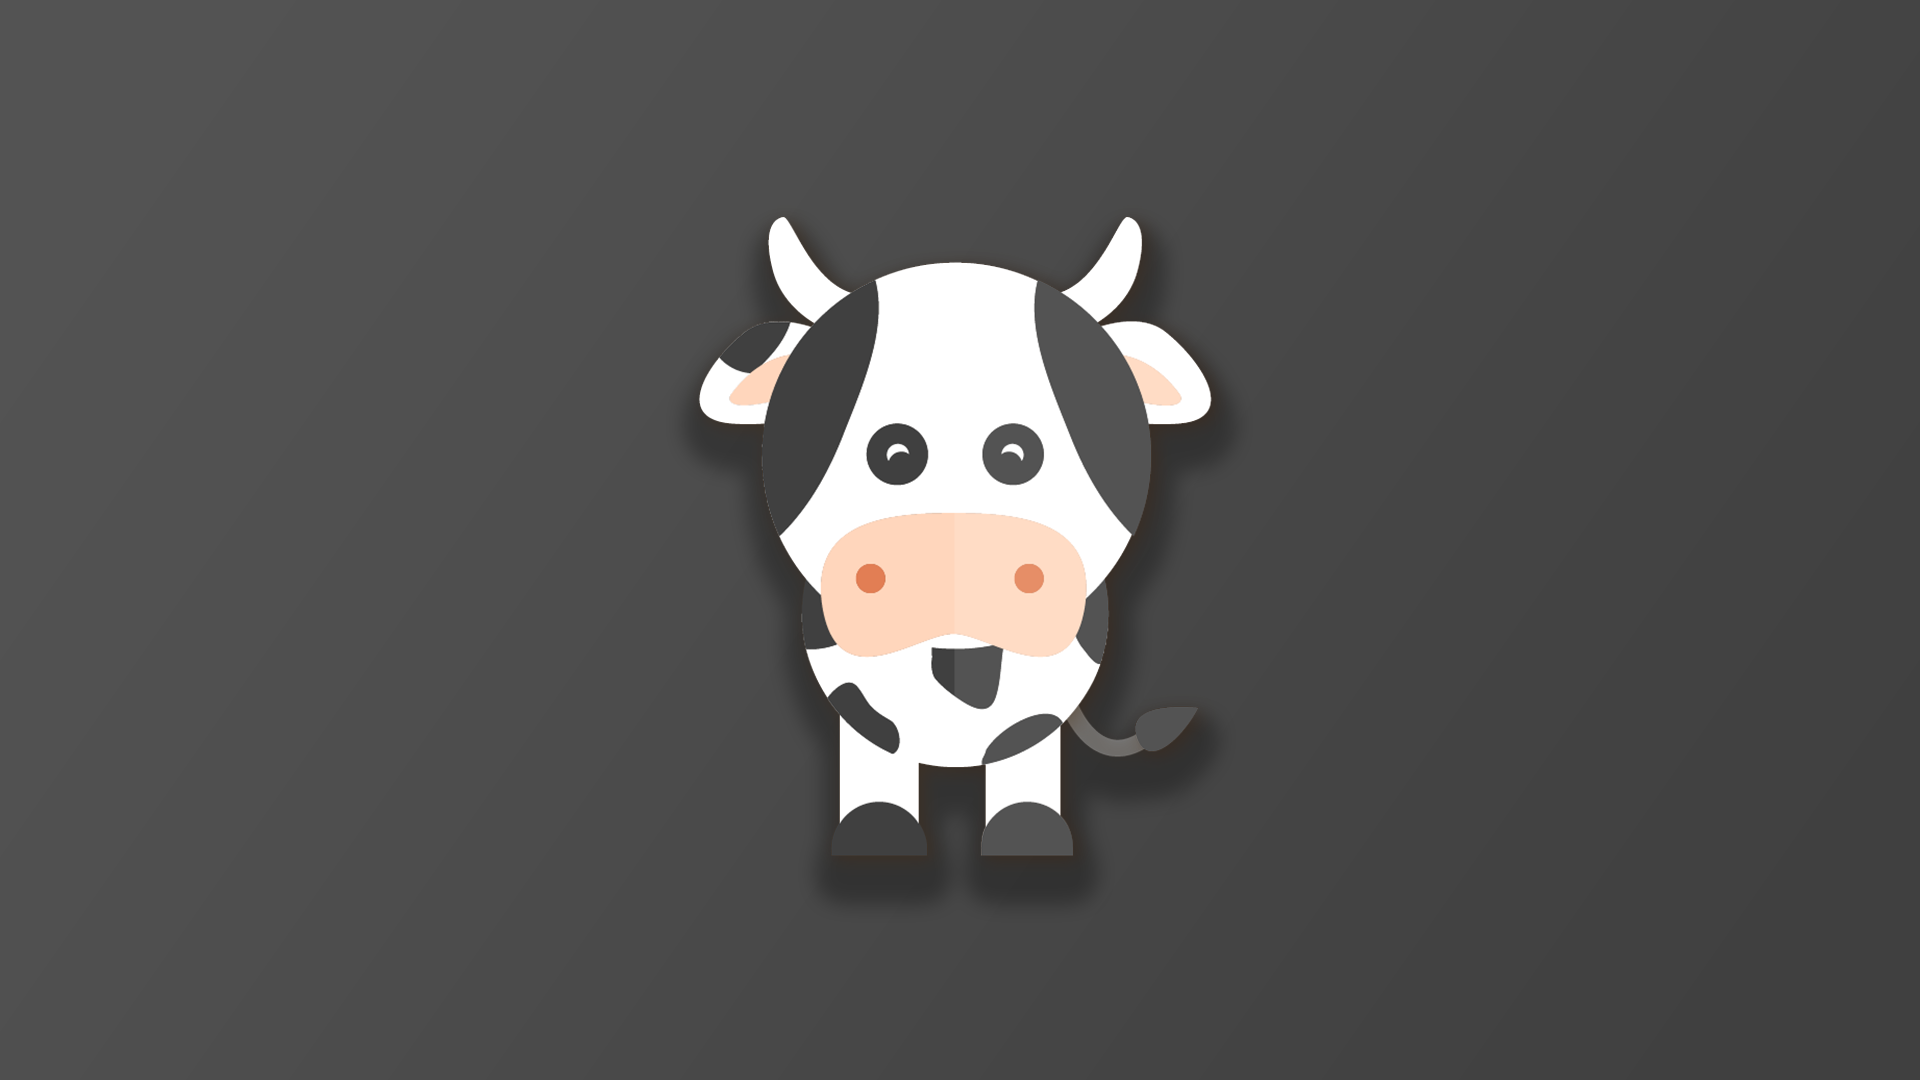 General 1920x1080 digital art animals cow simple background artwork